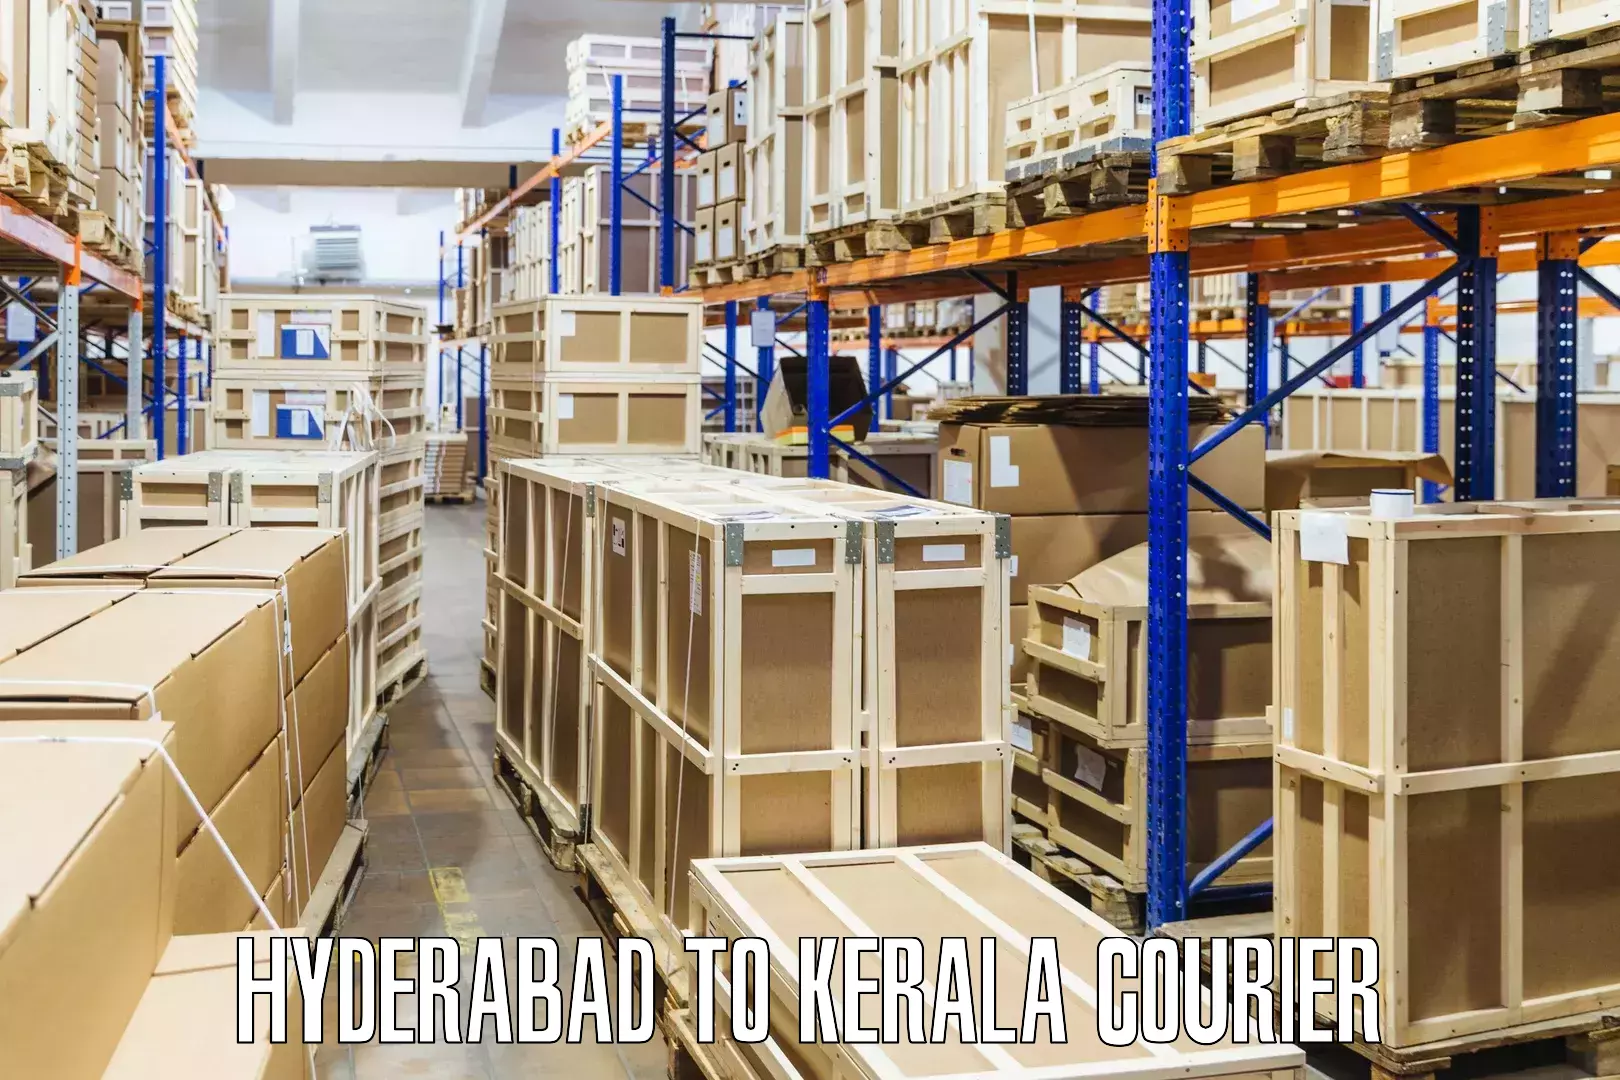 Courier service efficiency Hyderabad to Kattappana